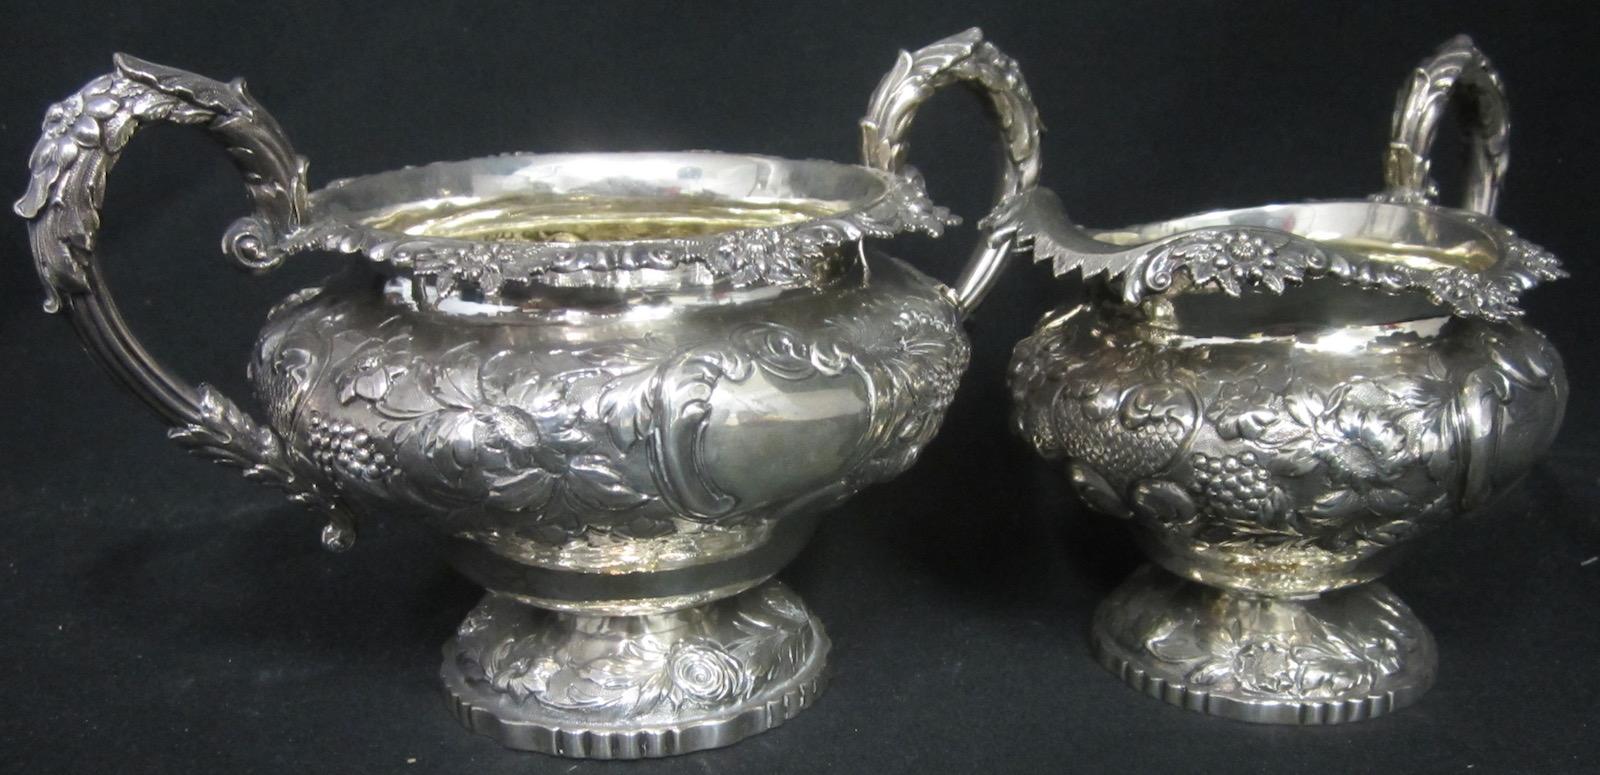 Exceptional quality George IV silver sugar bowl and cream jug, 
London 1825, 
makers mark CF, Charles Thomas Fox. 
Bowl 14 x 22cm and jug (13 x 15cm), total 688 grams, 24 ounces.